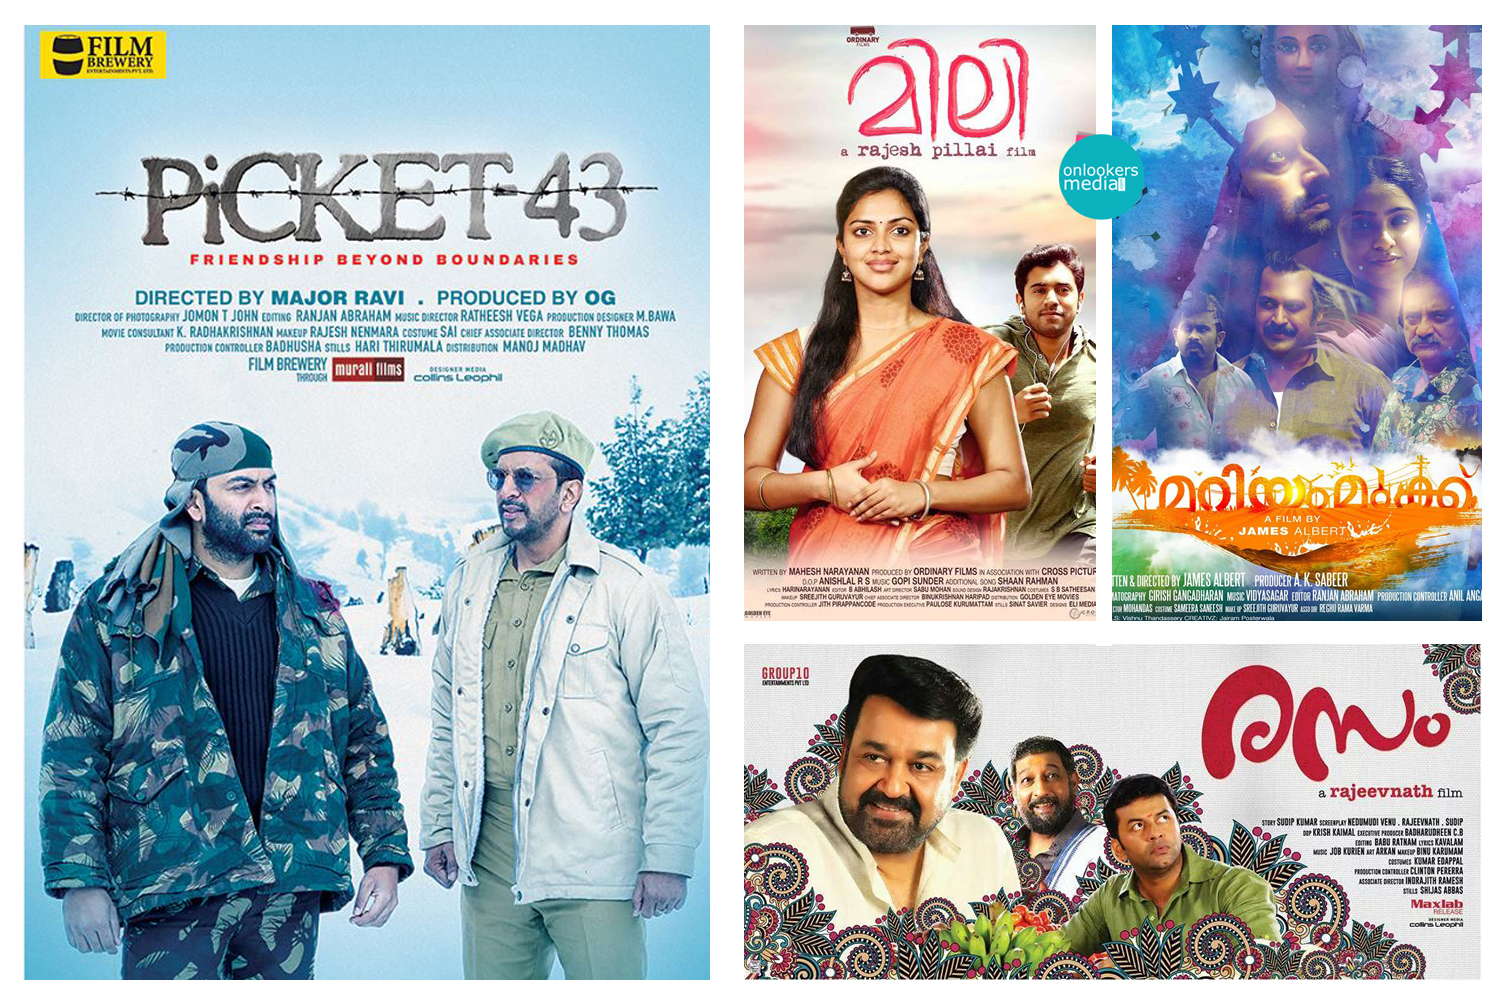 Malayalam Cinema crawling in the beginning of 2015-Malayalm movies of 2015-Prithviraj-Nivin Pauly-Amala Paul-Onlookers Media